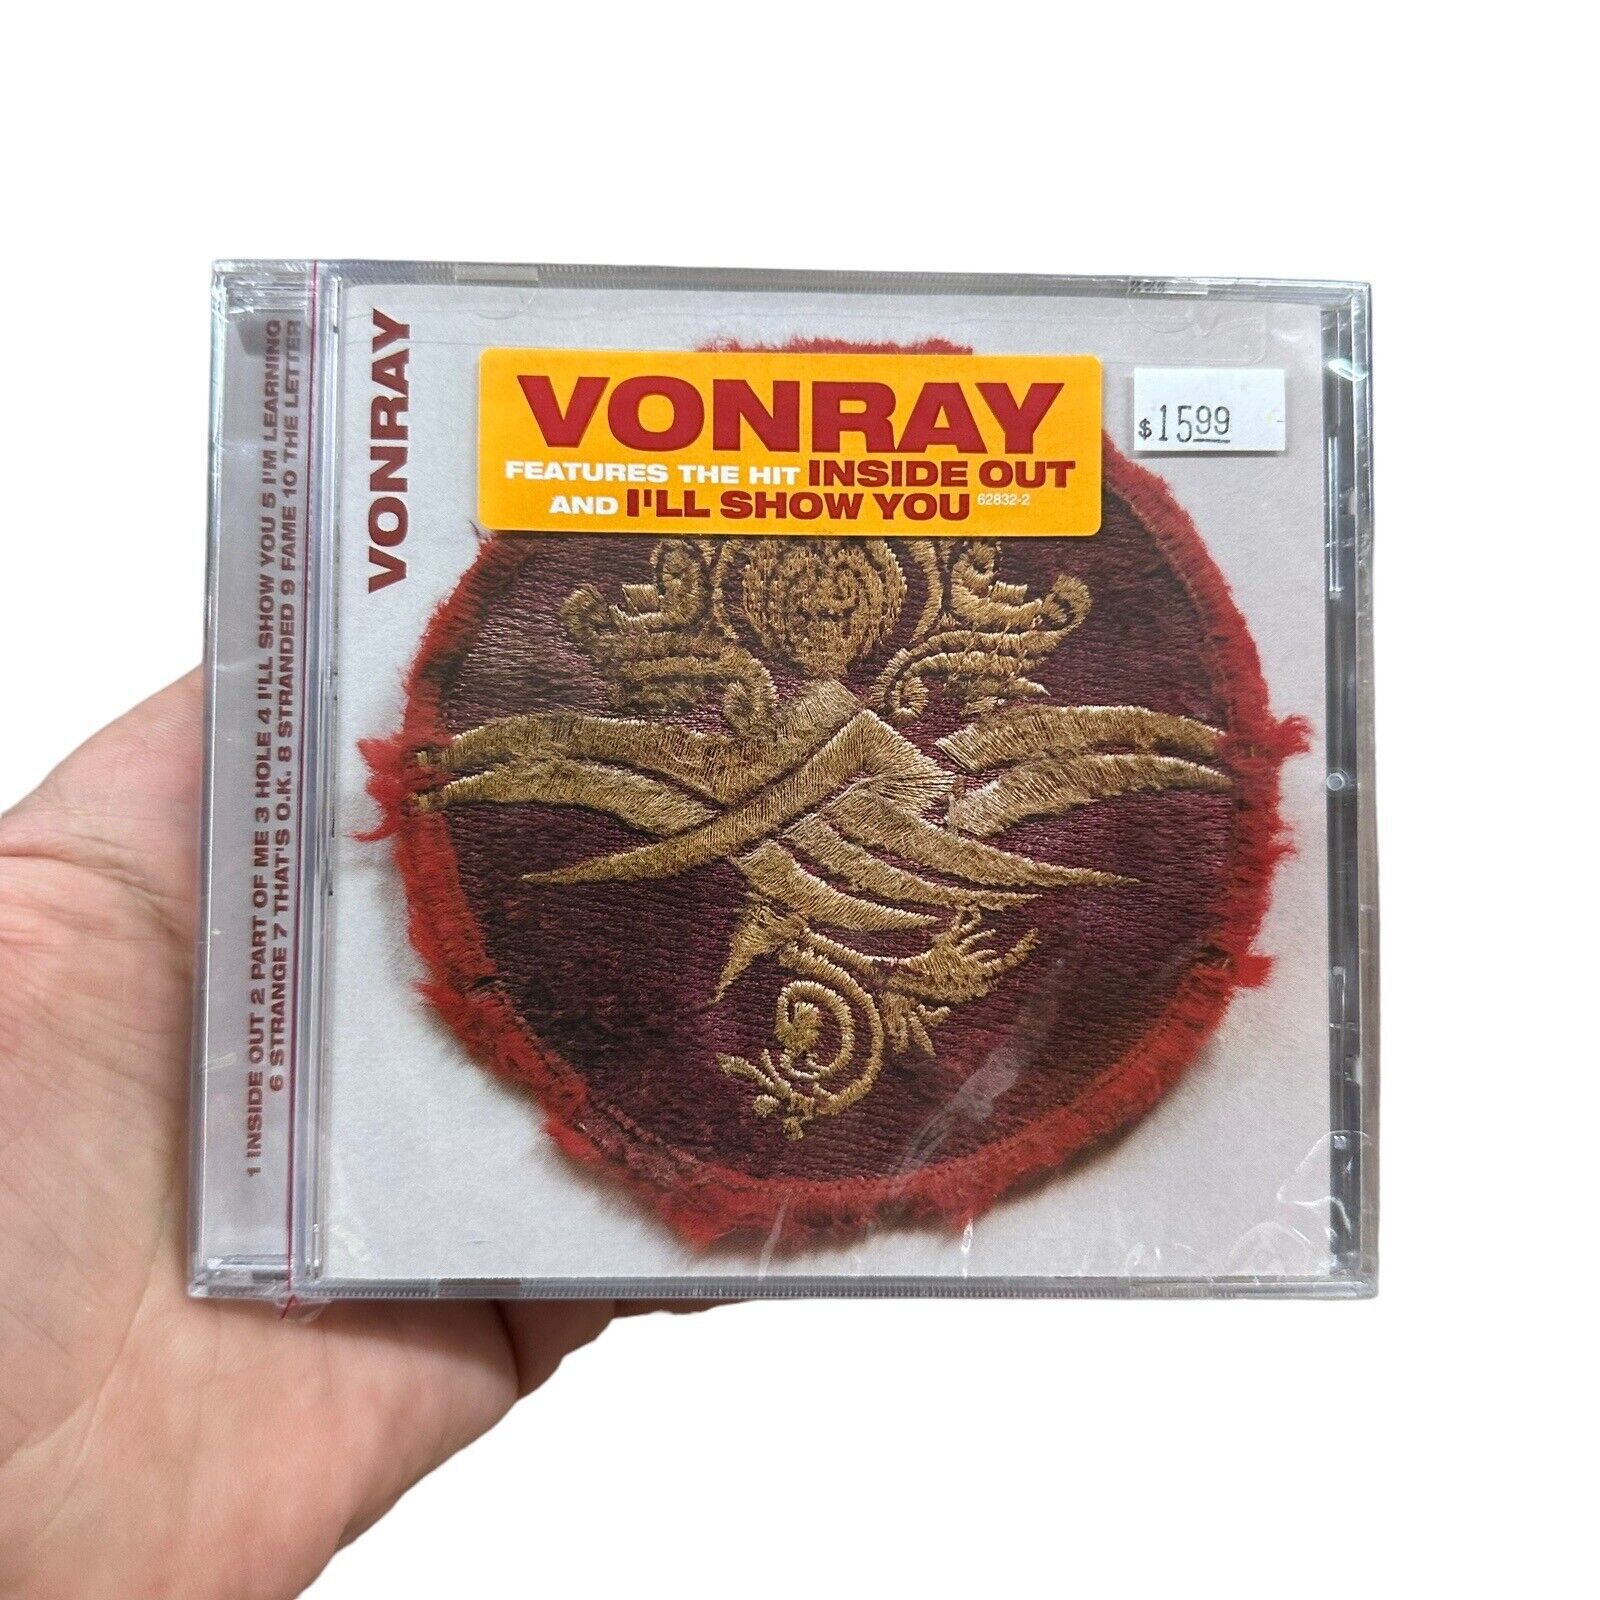 Vonray by Vonray (CD, 2003) Brand New in Plastic. Still sealed. 